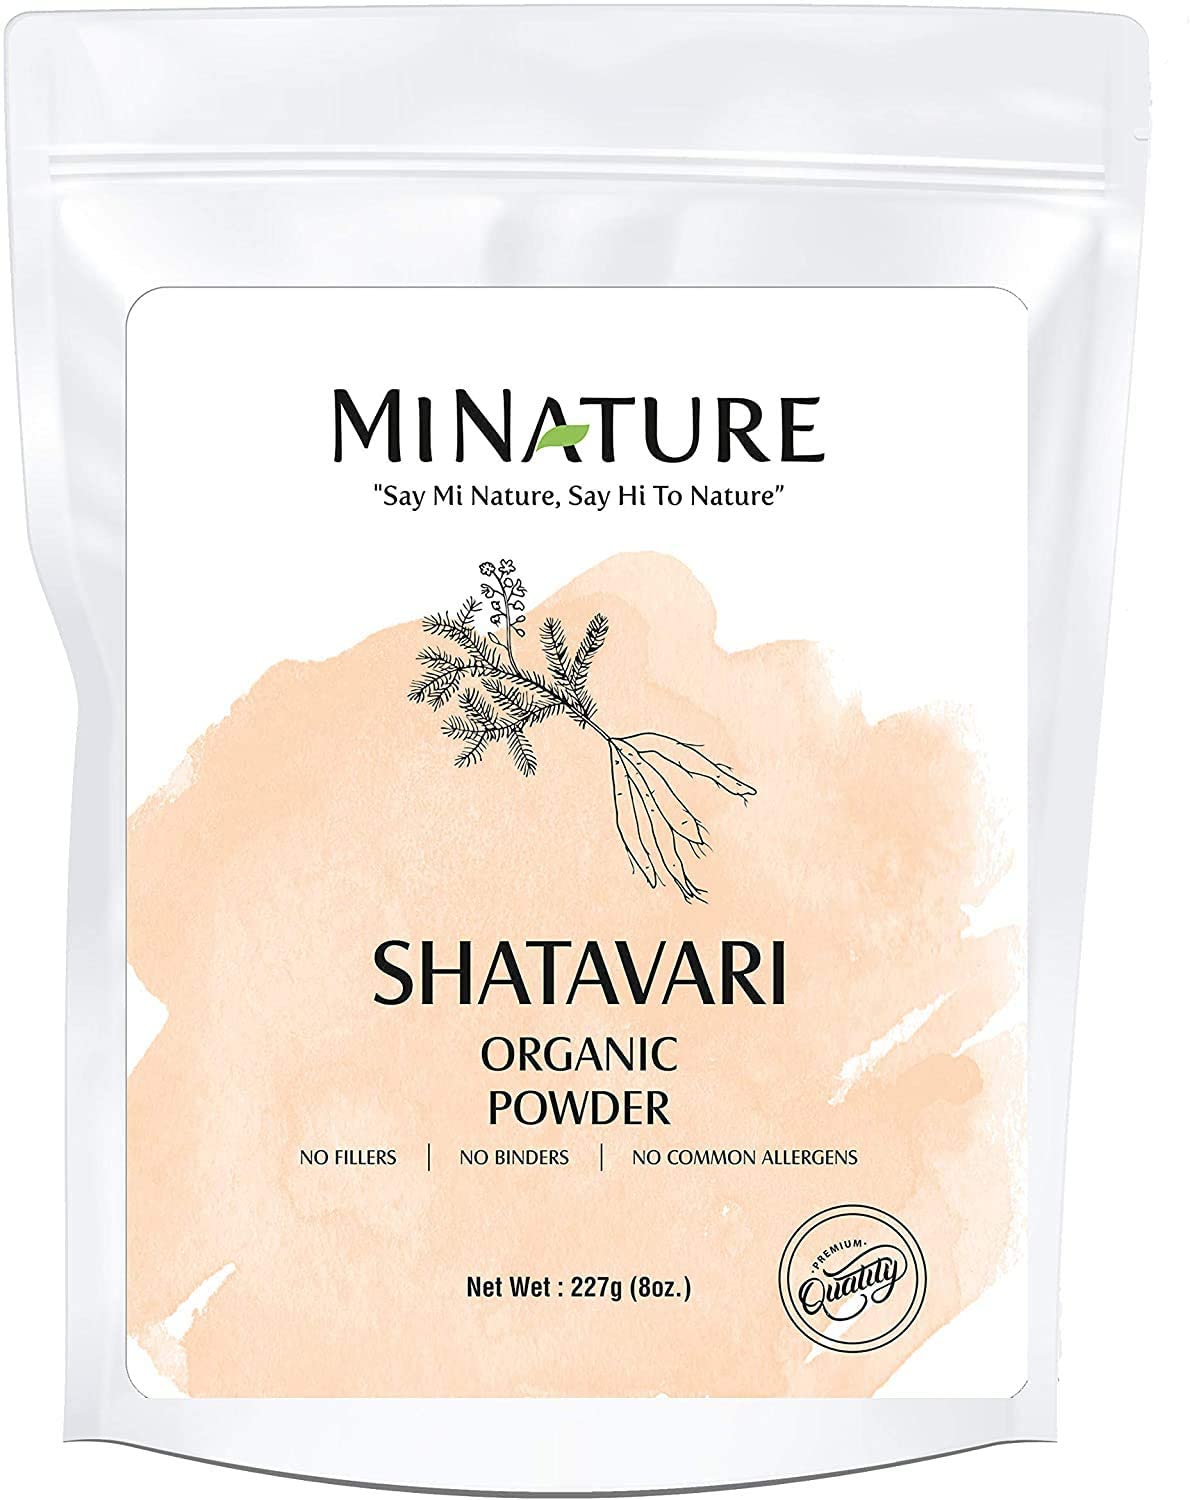 Organic Shatavari Powder 227g - USDA Certified